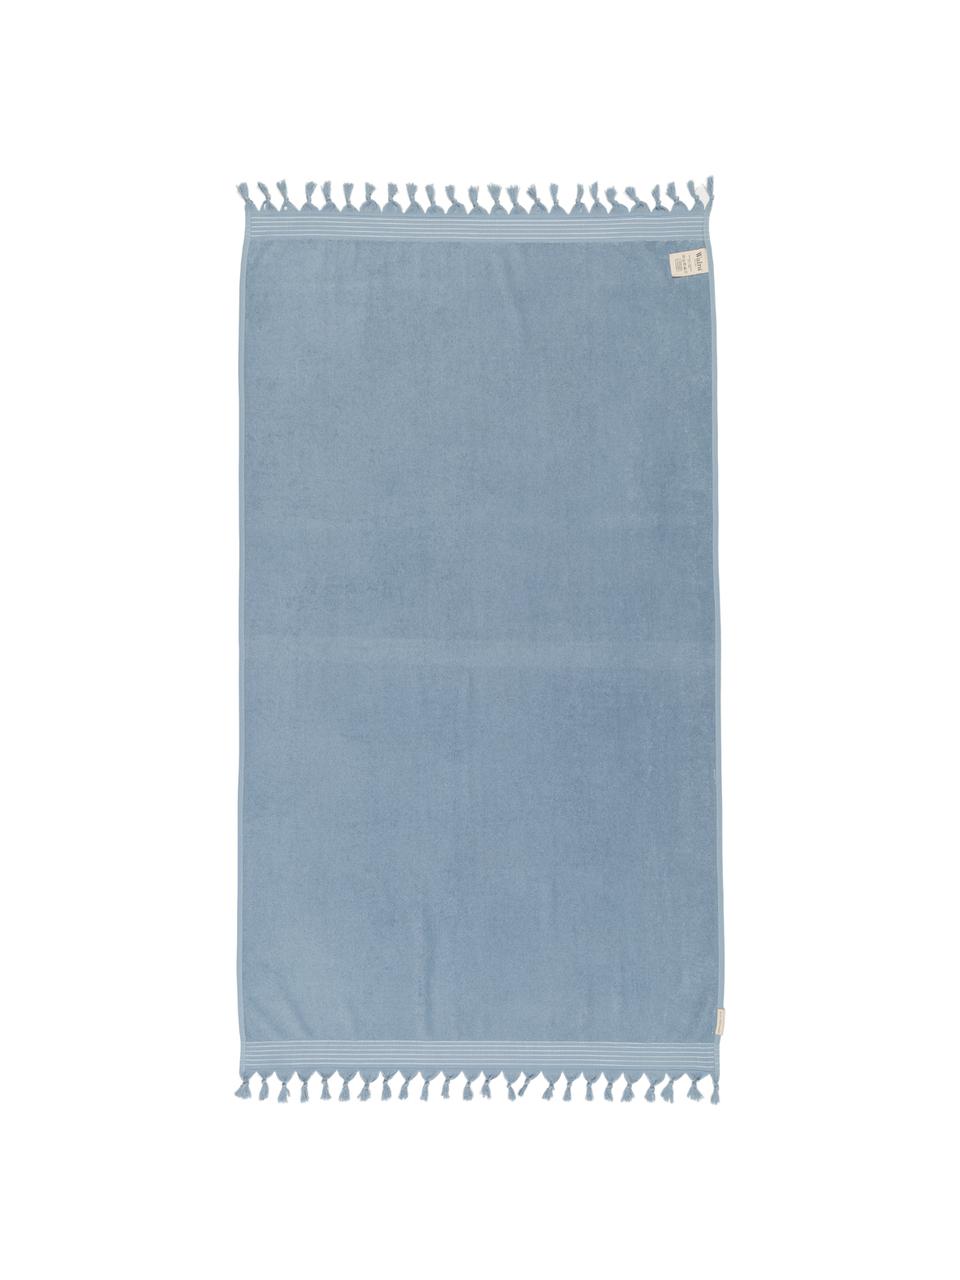 Fouta en tissu éponge Soft Coton, Bleu, blanc, larg. 100 x long. 180 cm